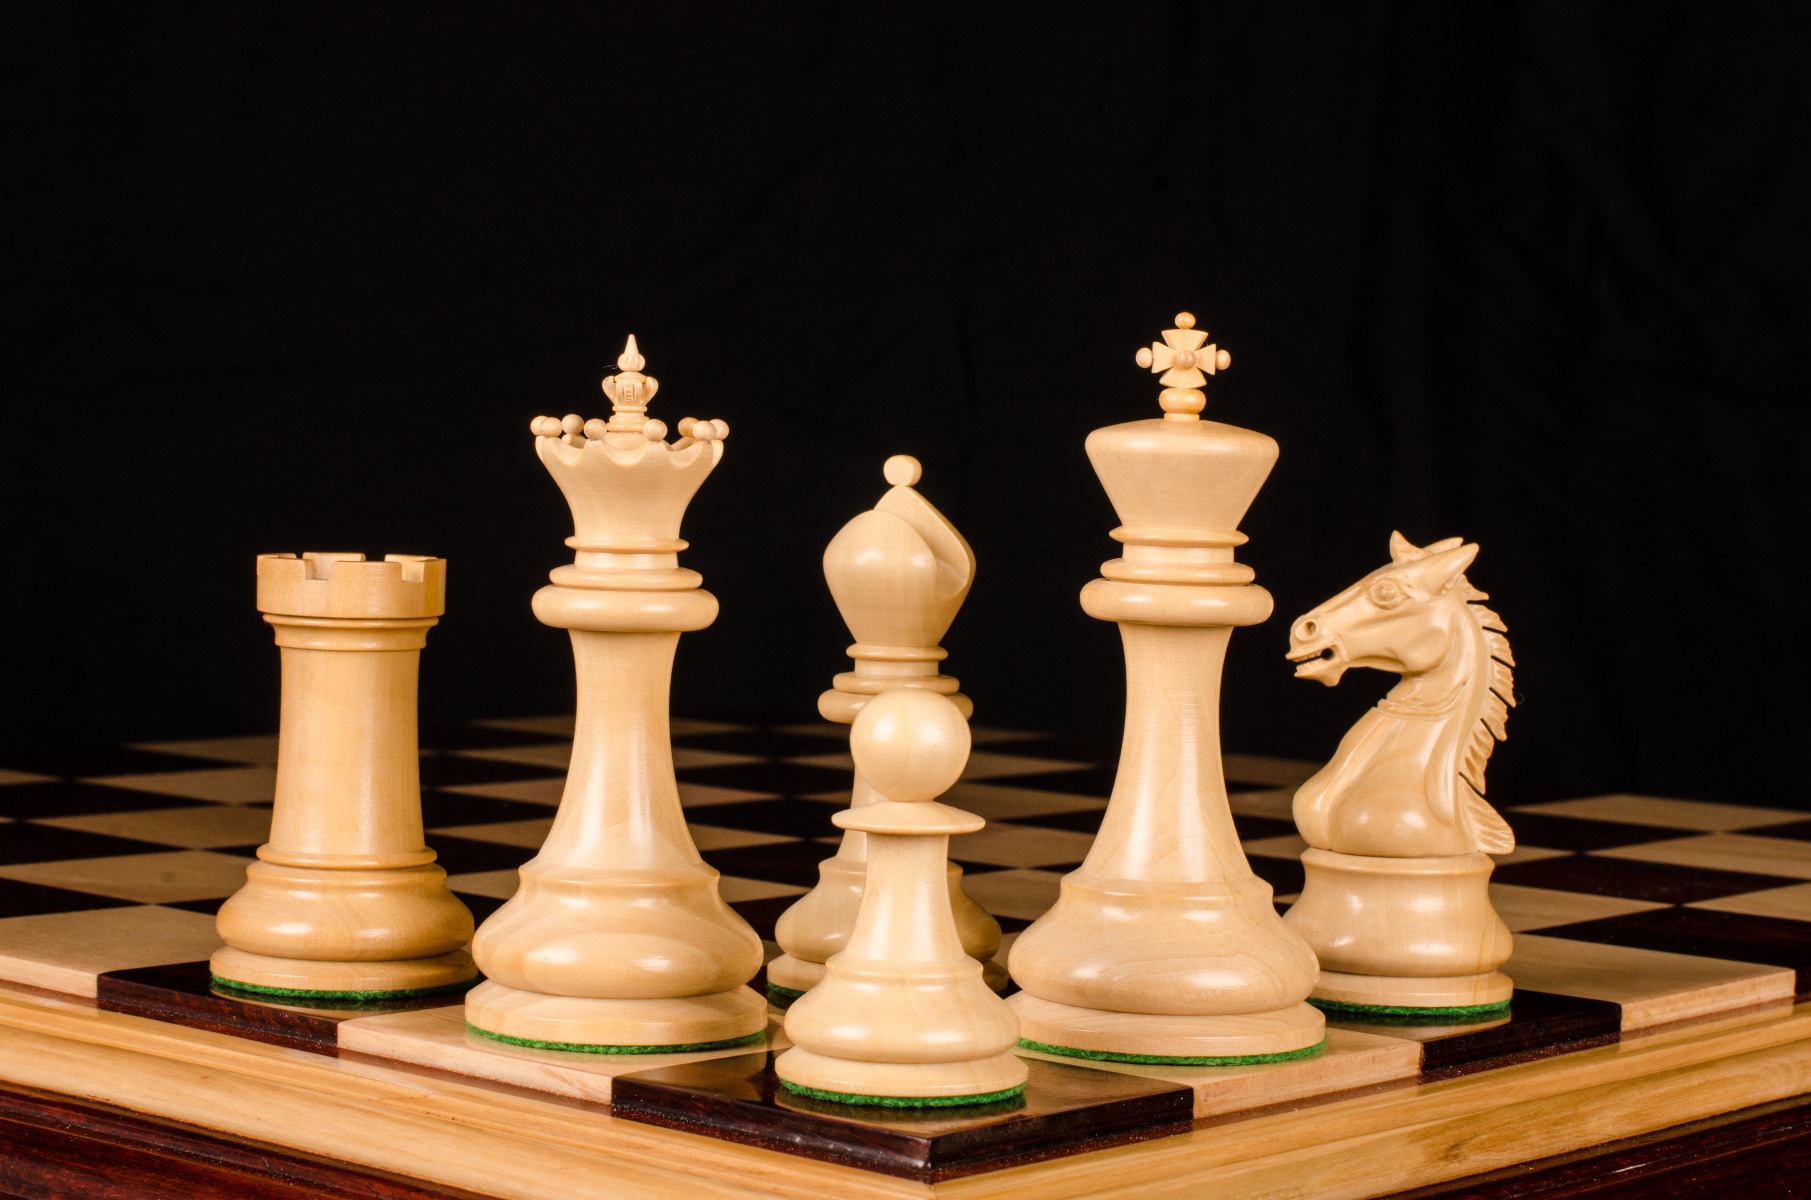 Chess: We three kings